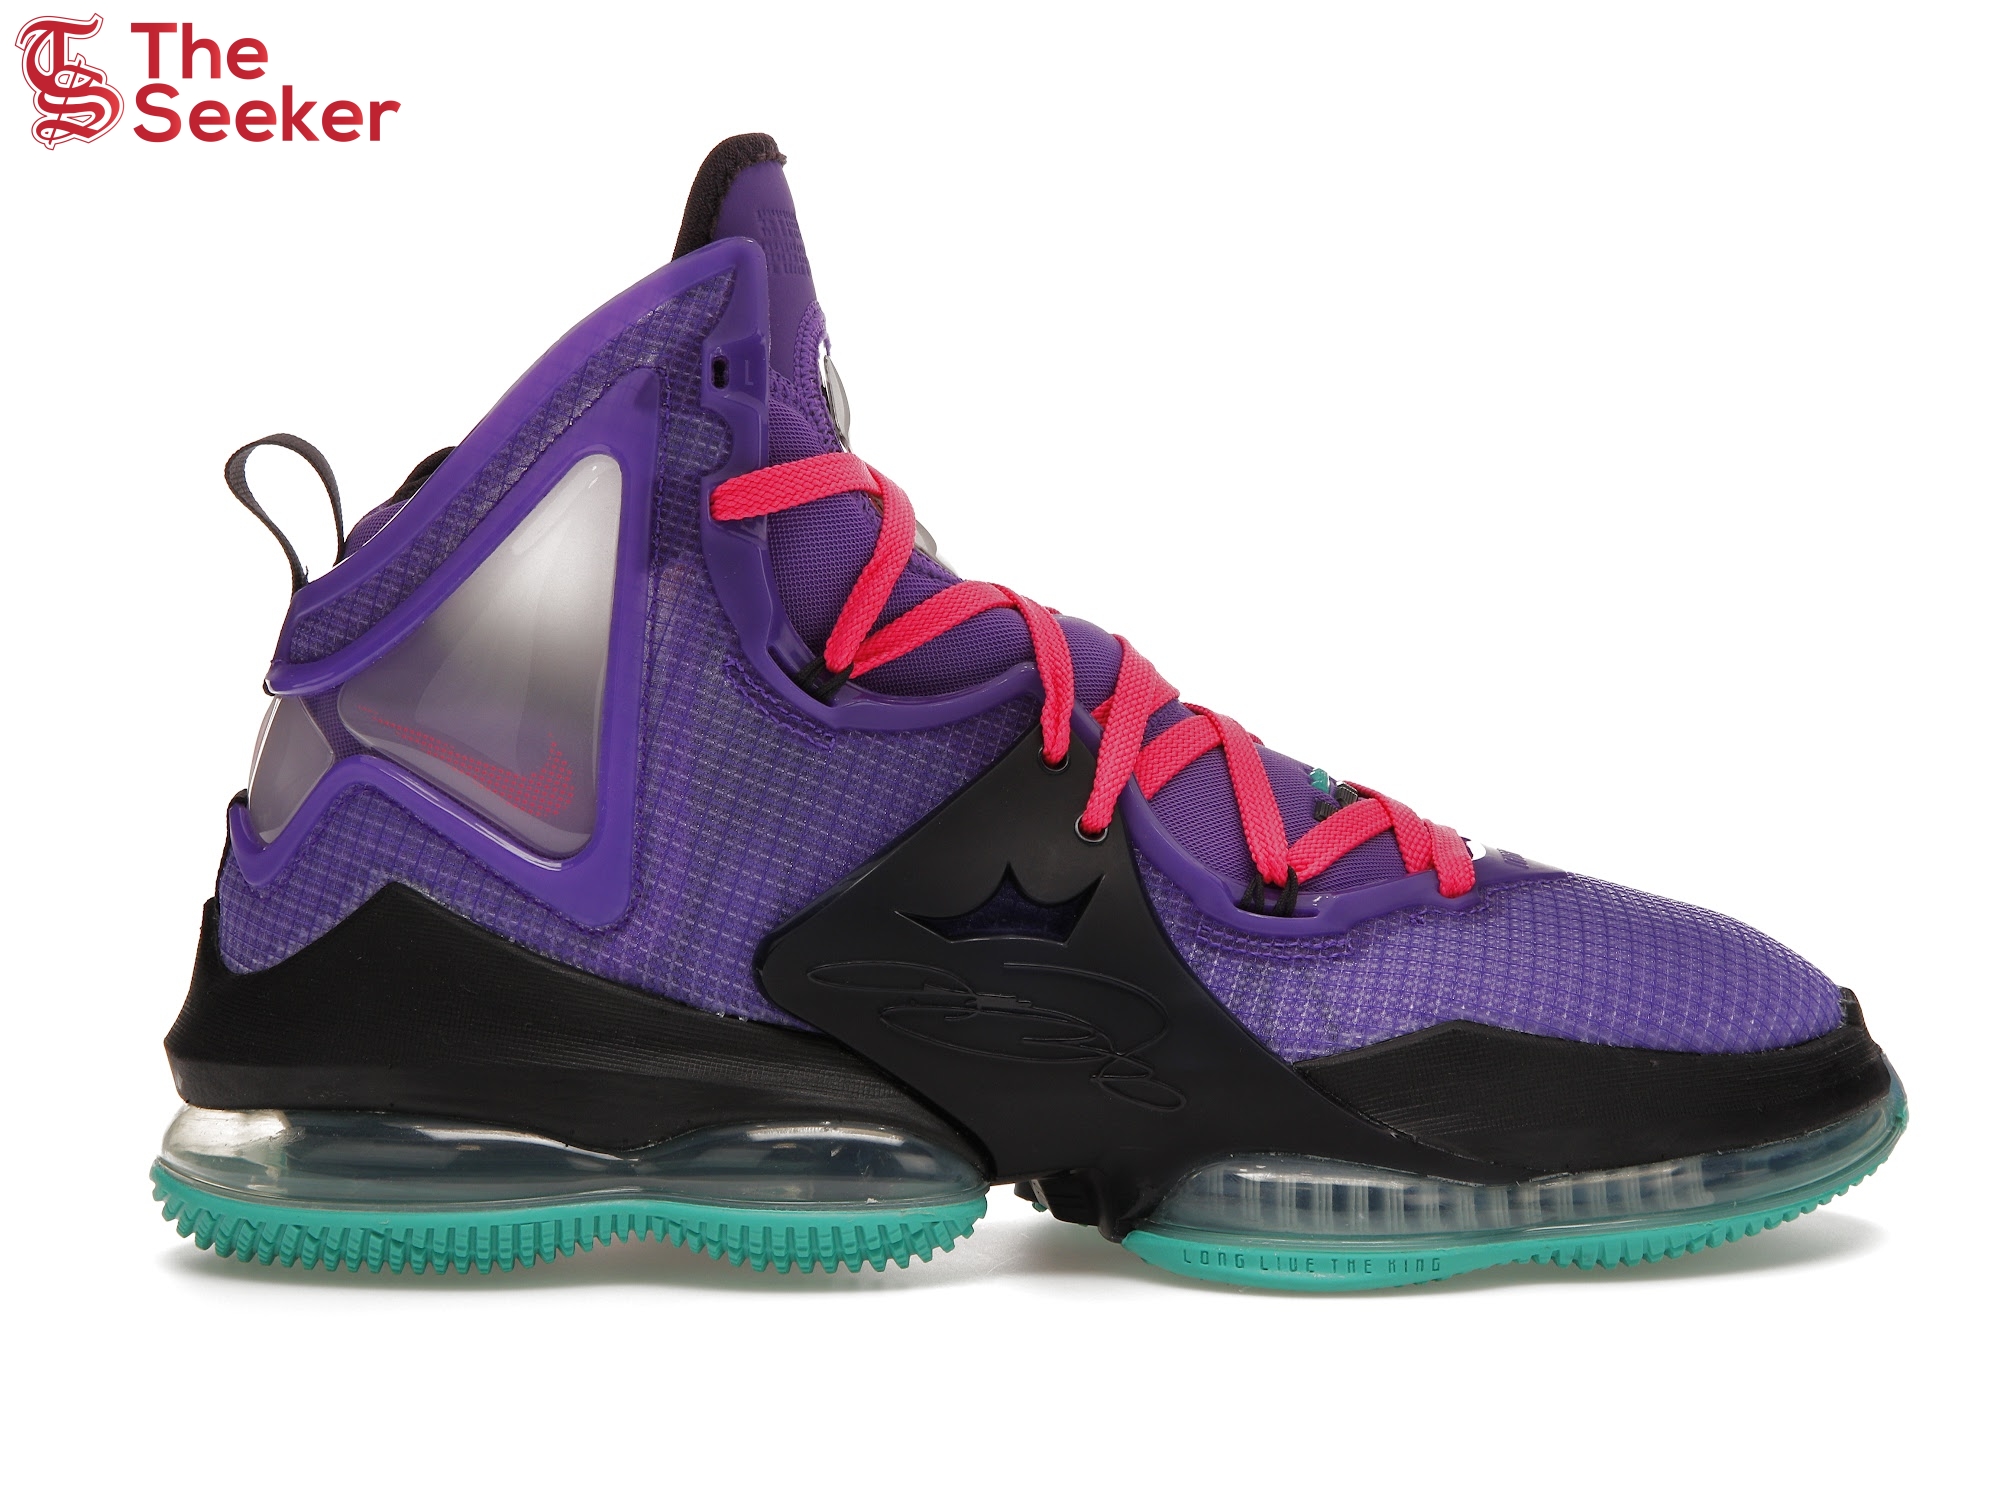 Nike LeBron 19 Purple Teal